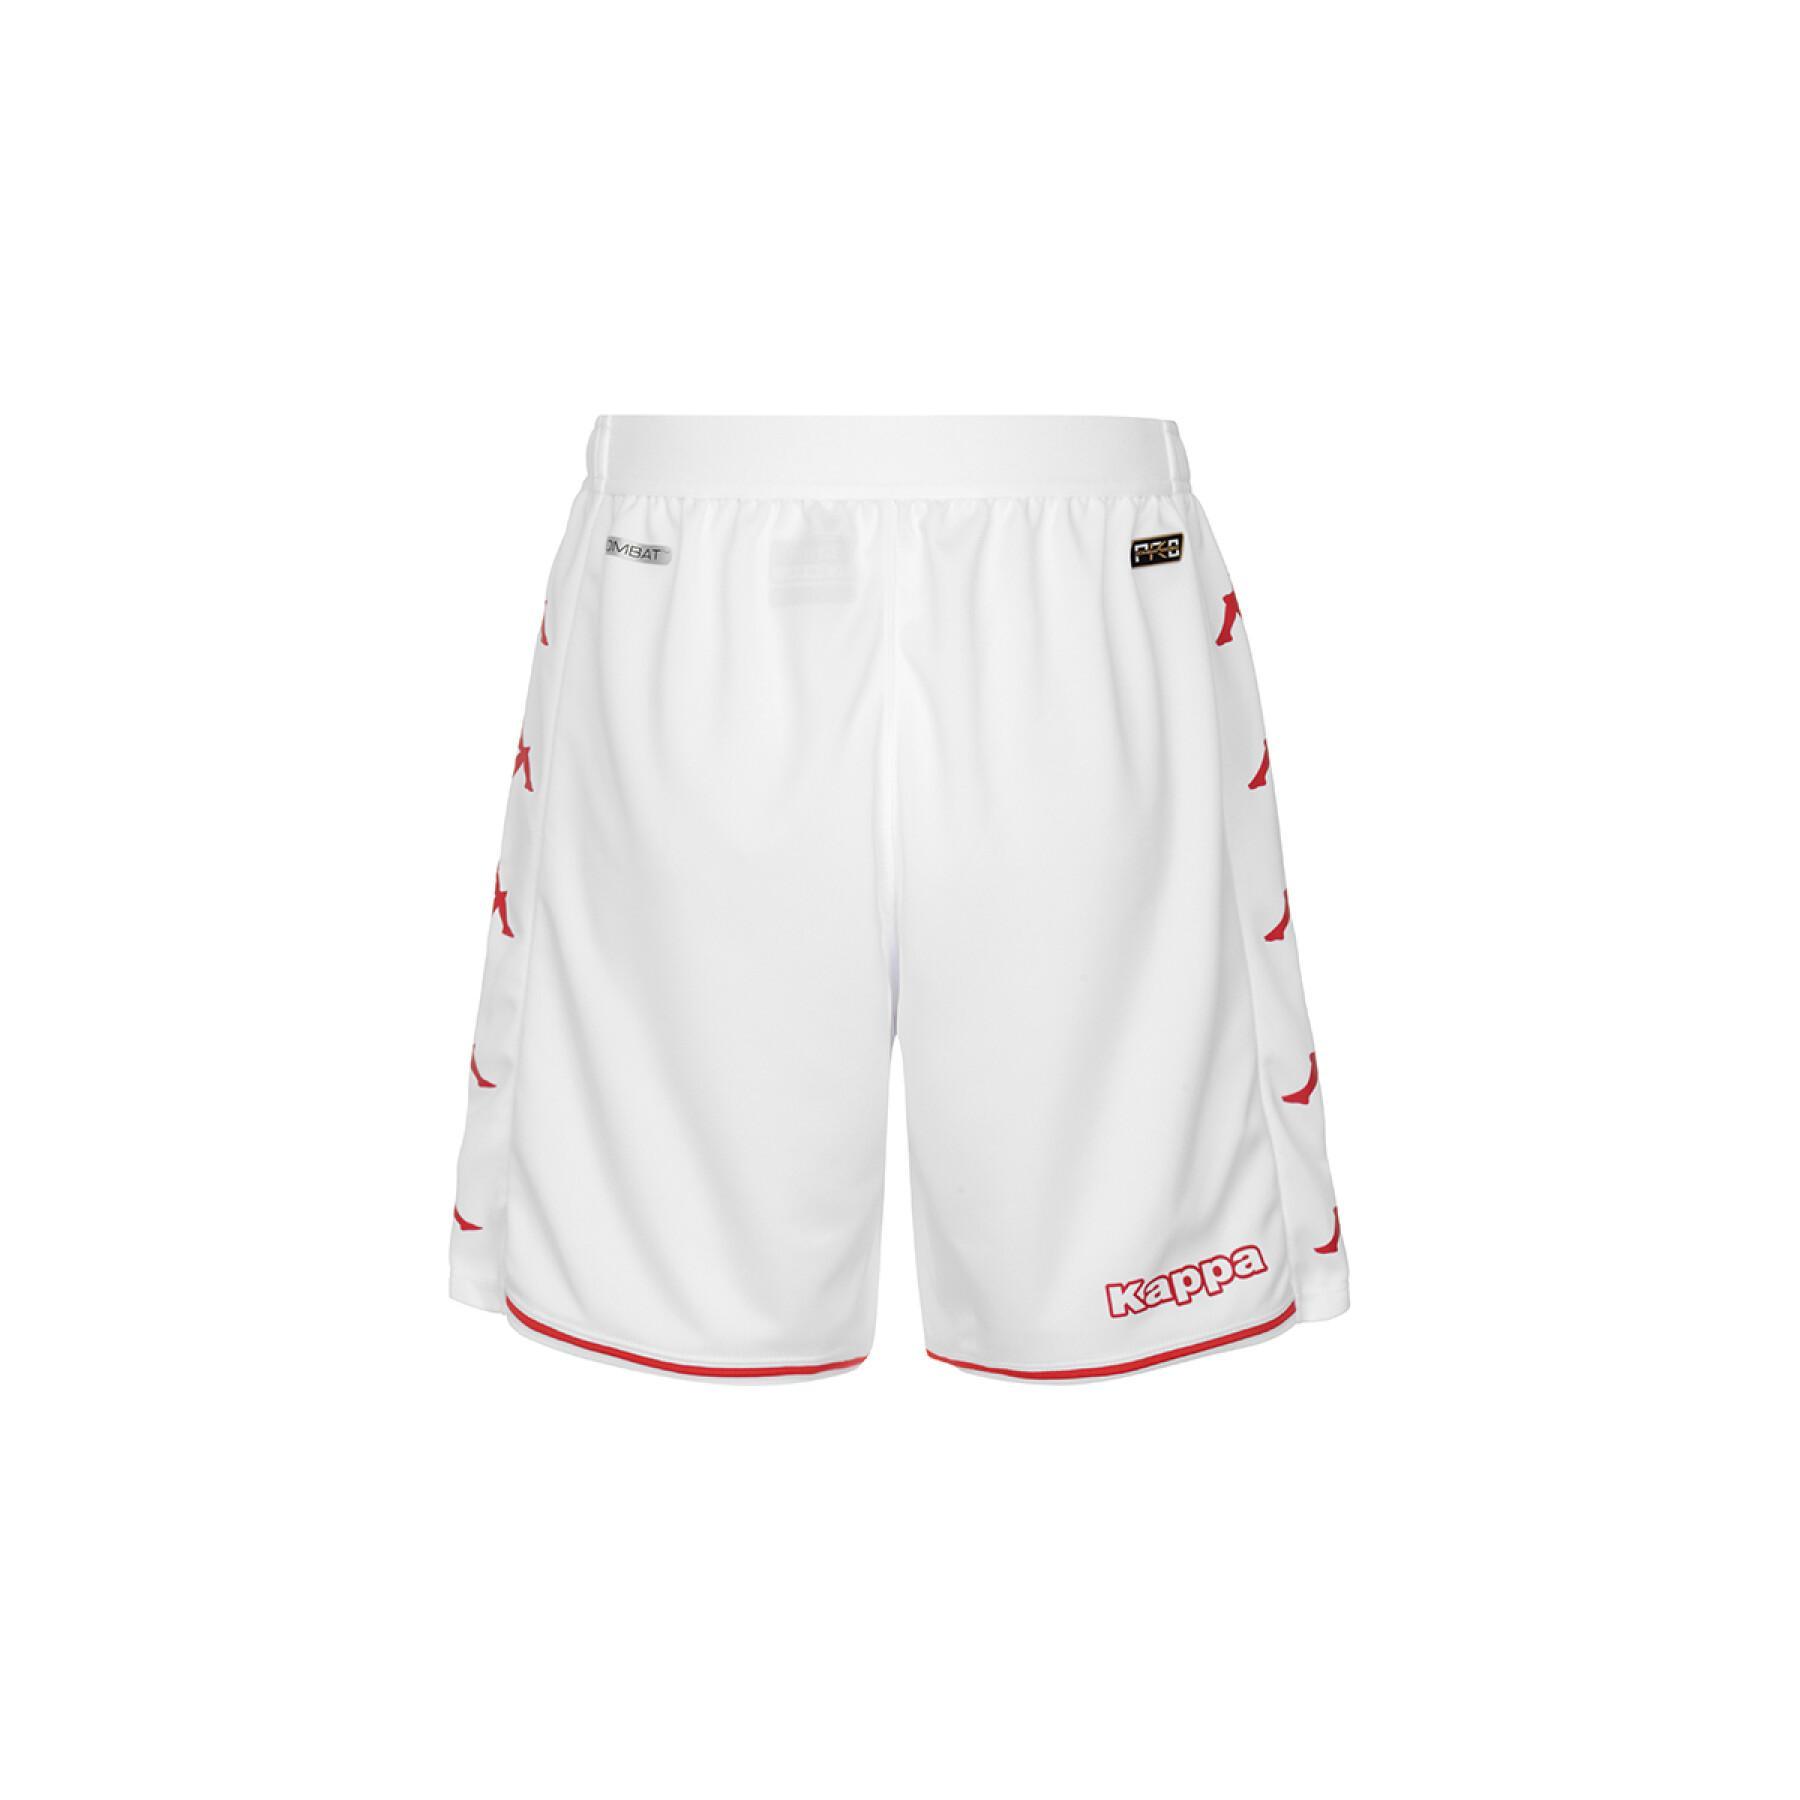 Authentic shorts AS Monaco 2021/22